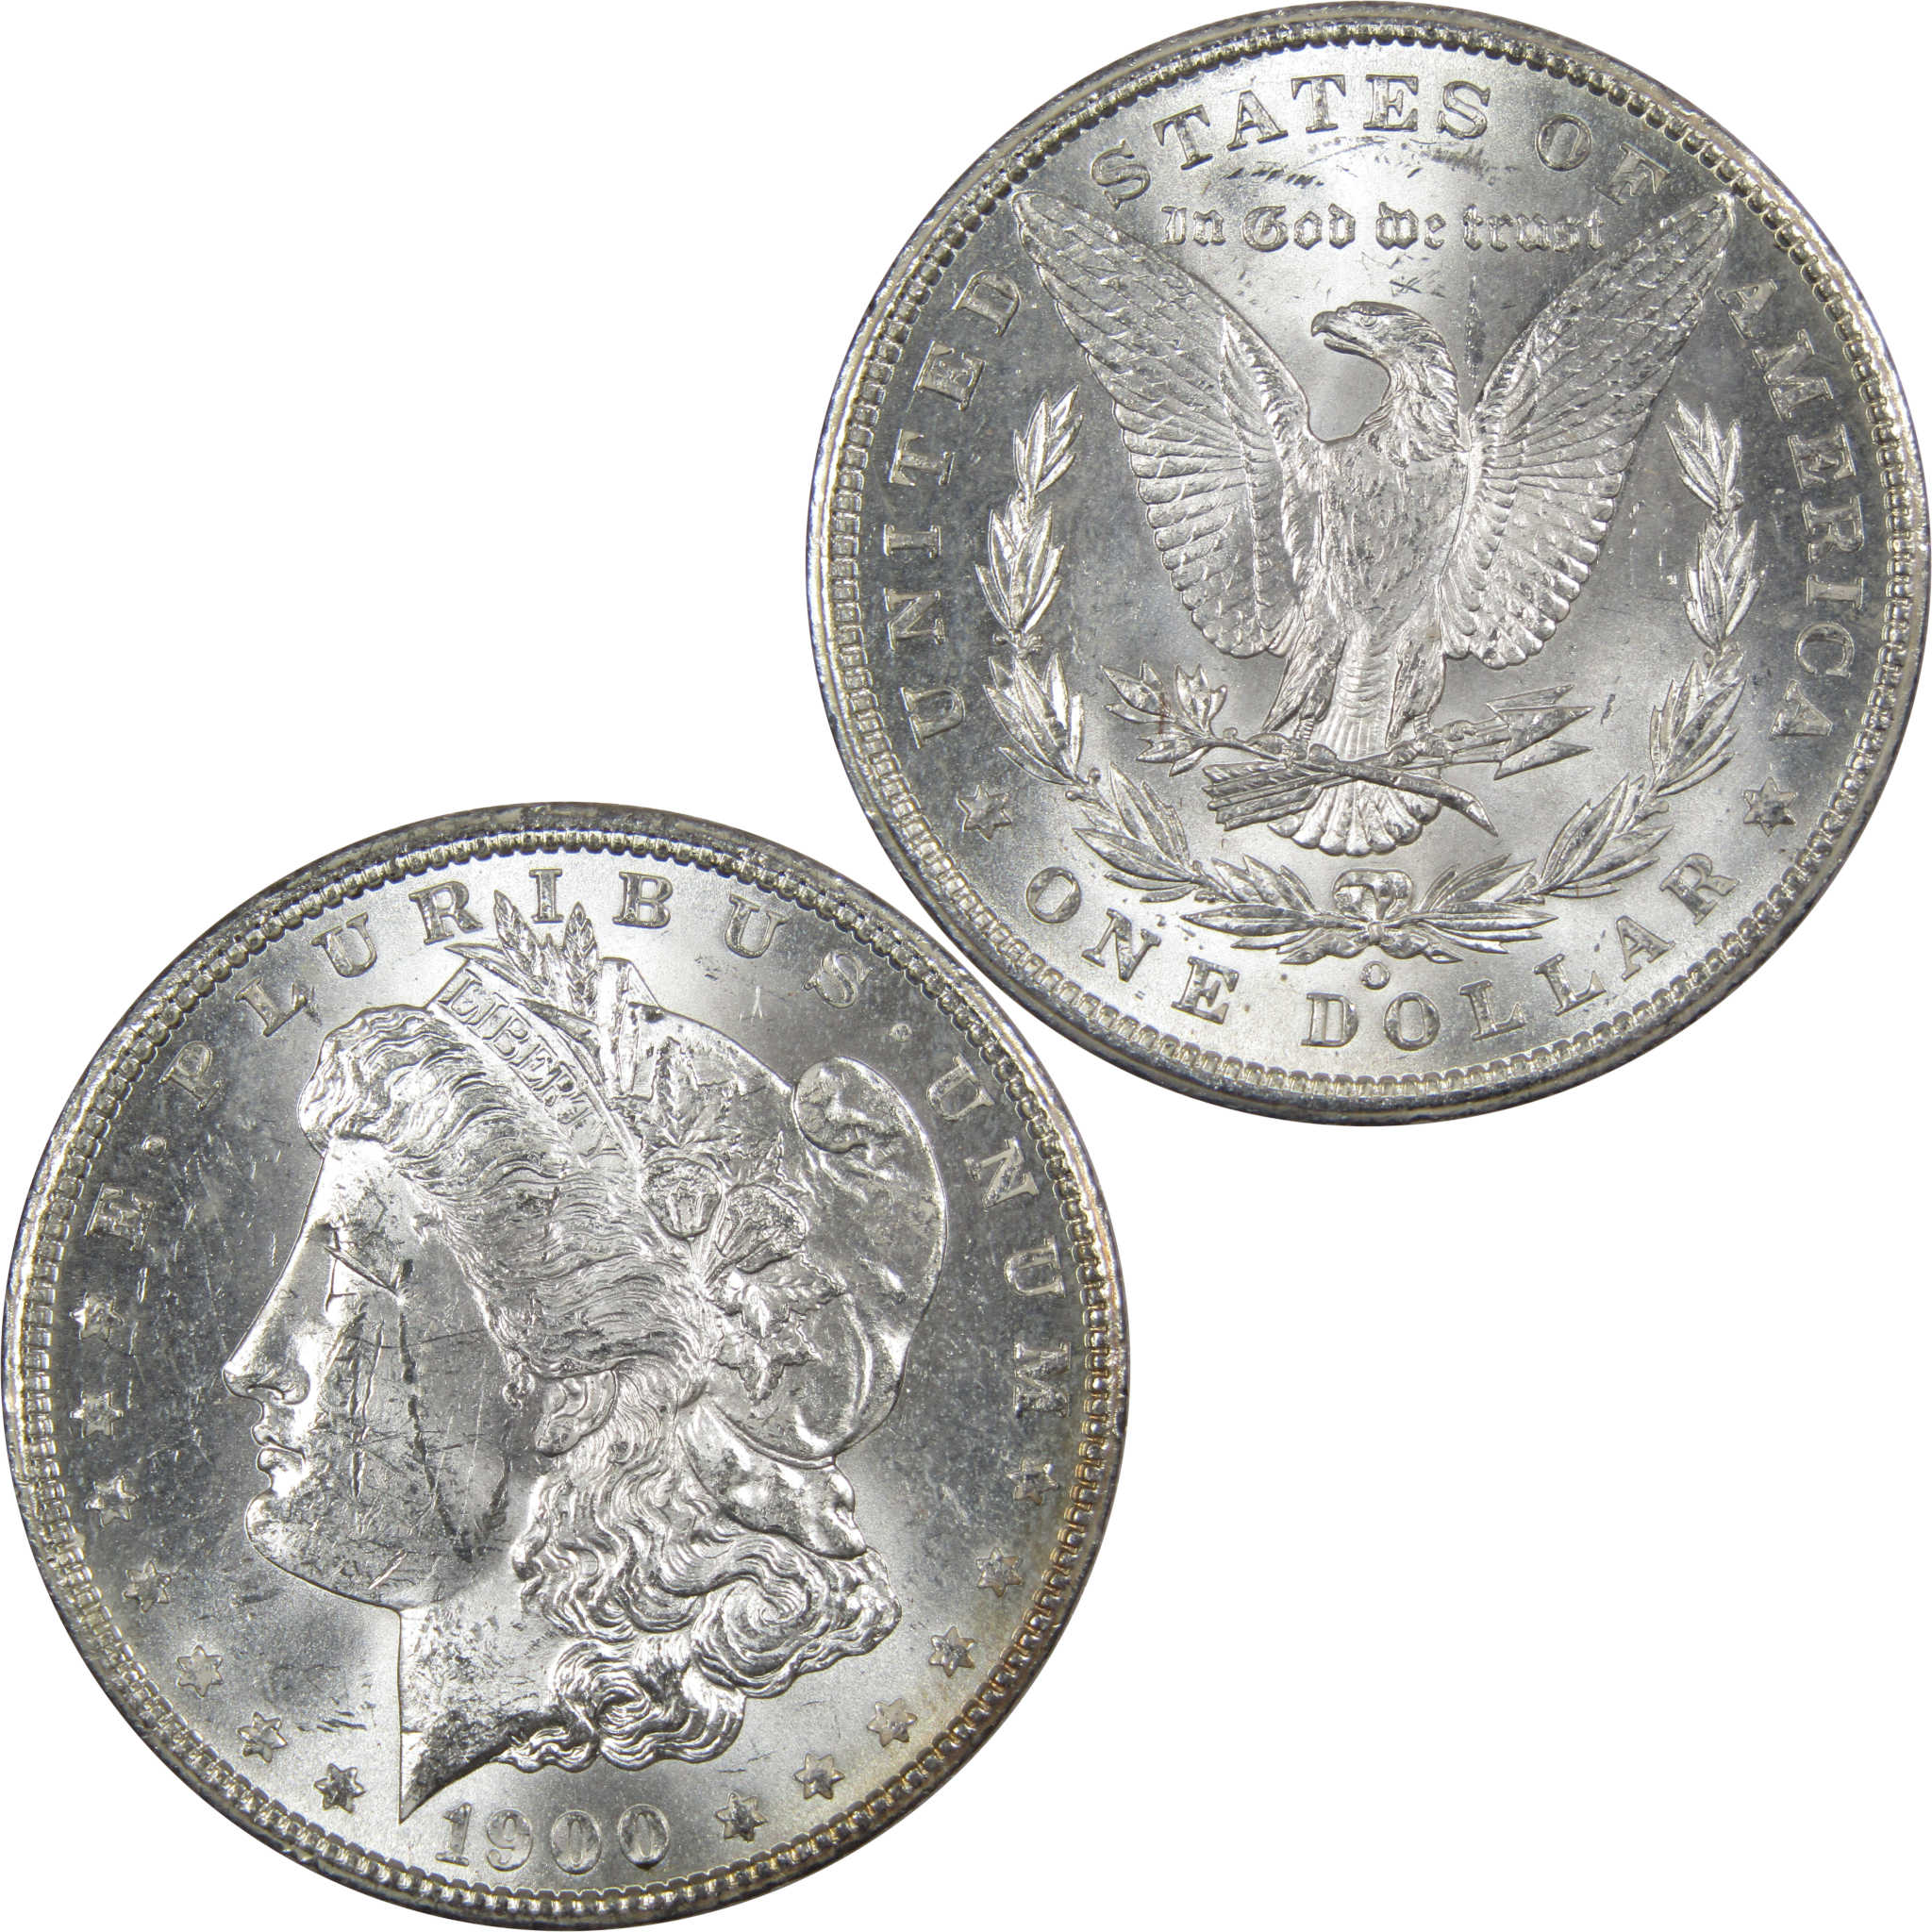 1900 O Morgan Dollar BU Uncirculated Mint State 90% Silver SKU:IPC9800 - Morgan coin - Morgan silver dollar - Morgan silver dollar for sale - Profile Coins &amp; Collectibles